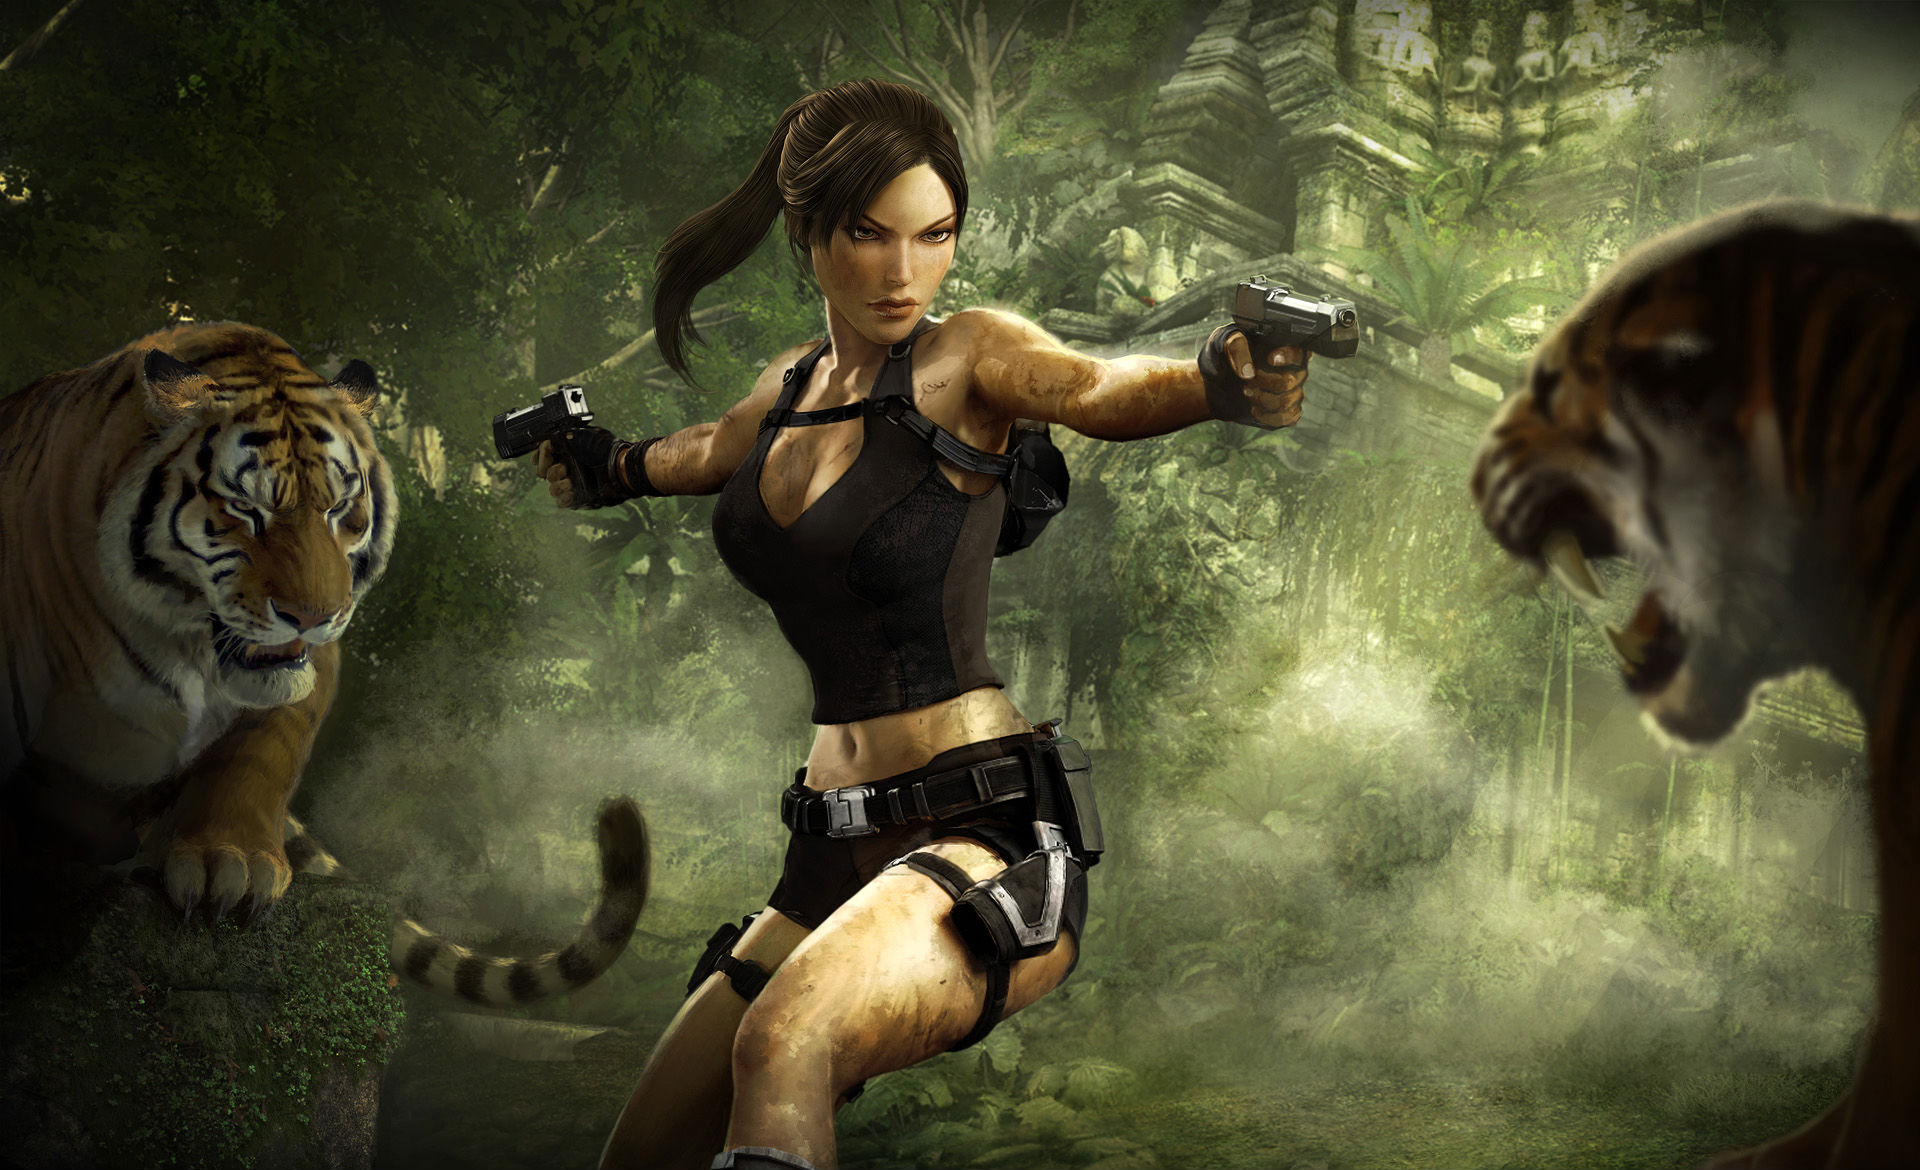 Tomb Raider: Underworld scene with Lara Croft encountering two blocking tigers.